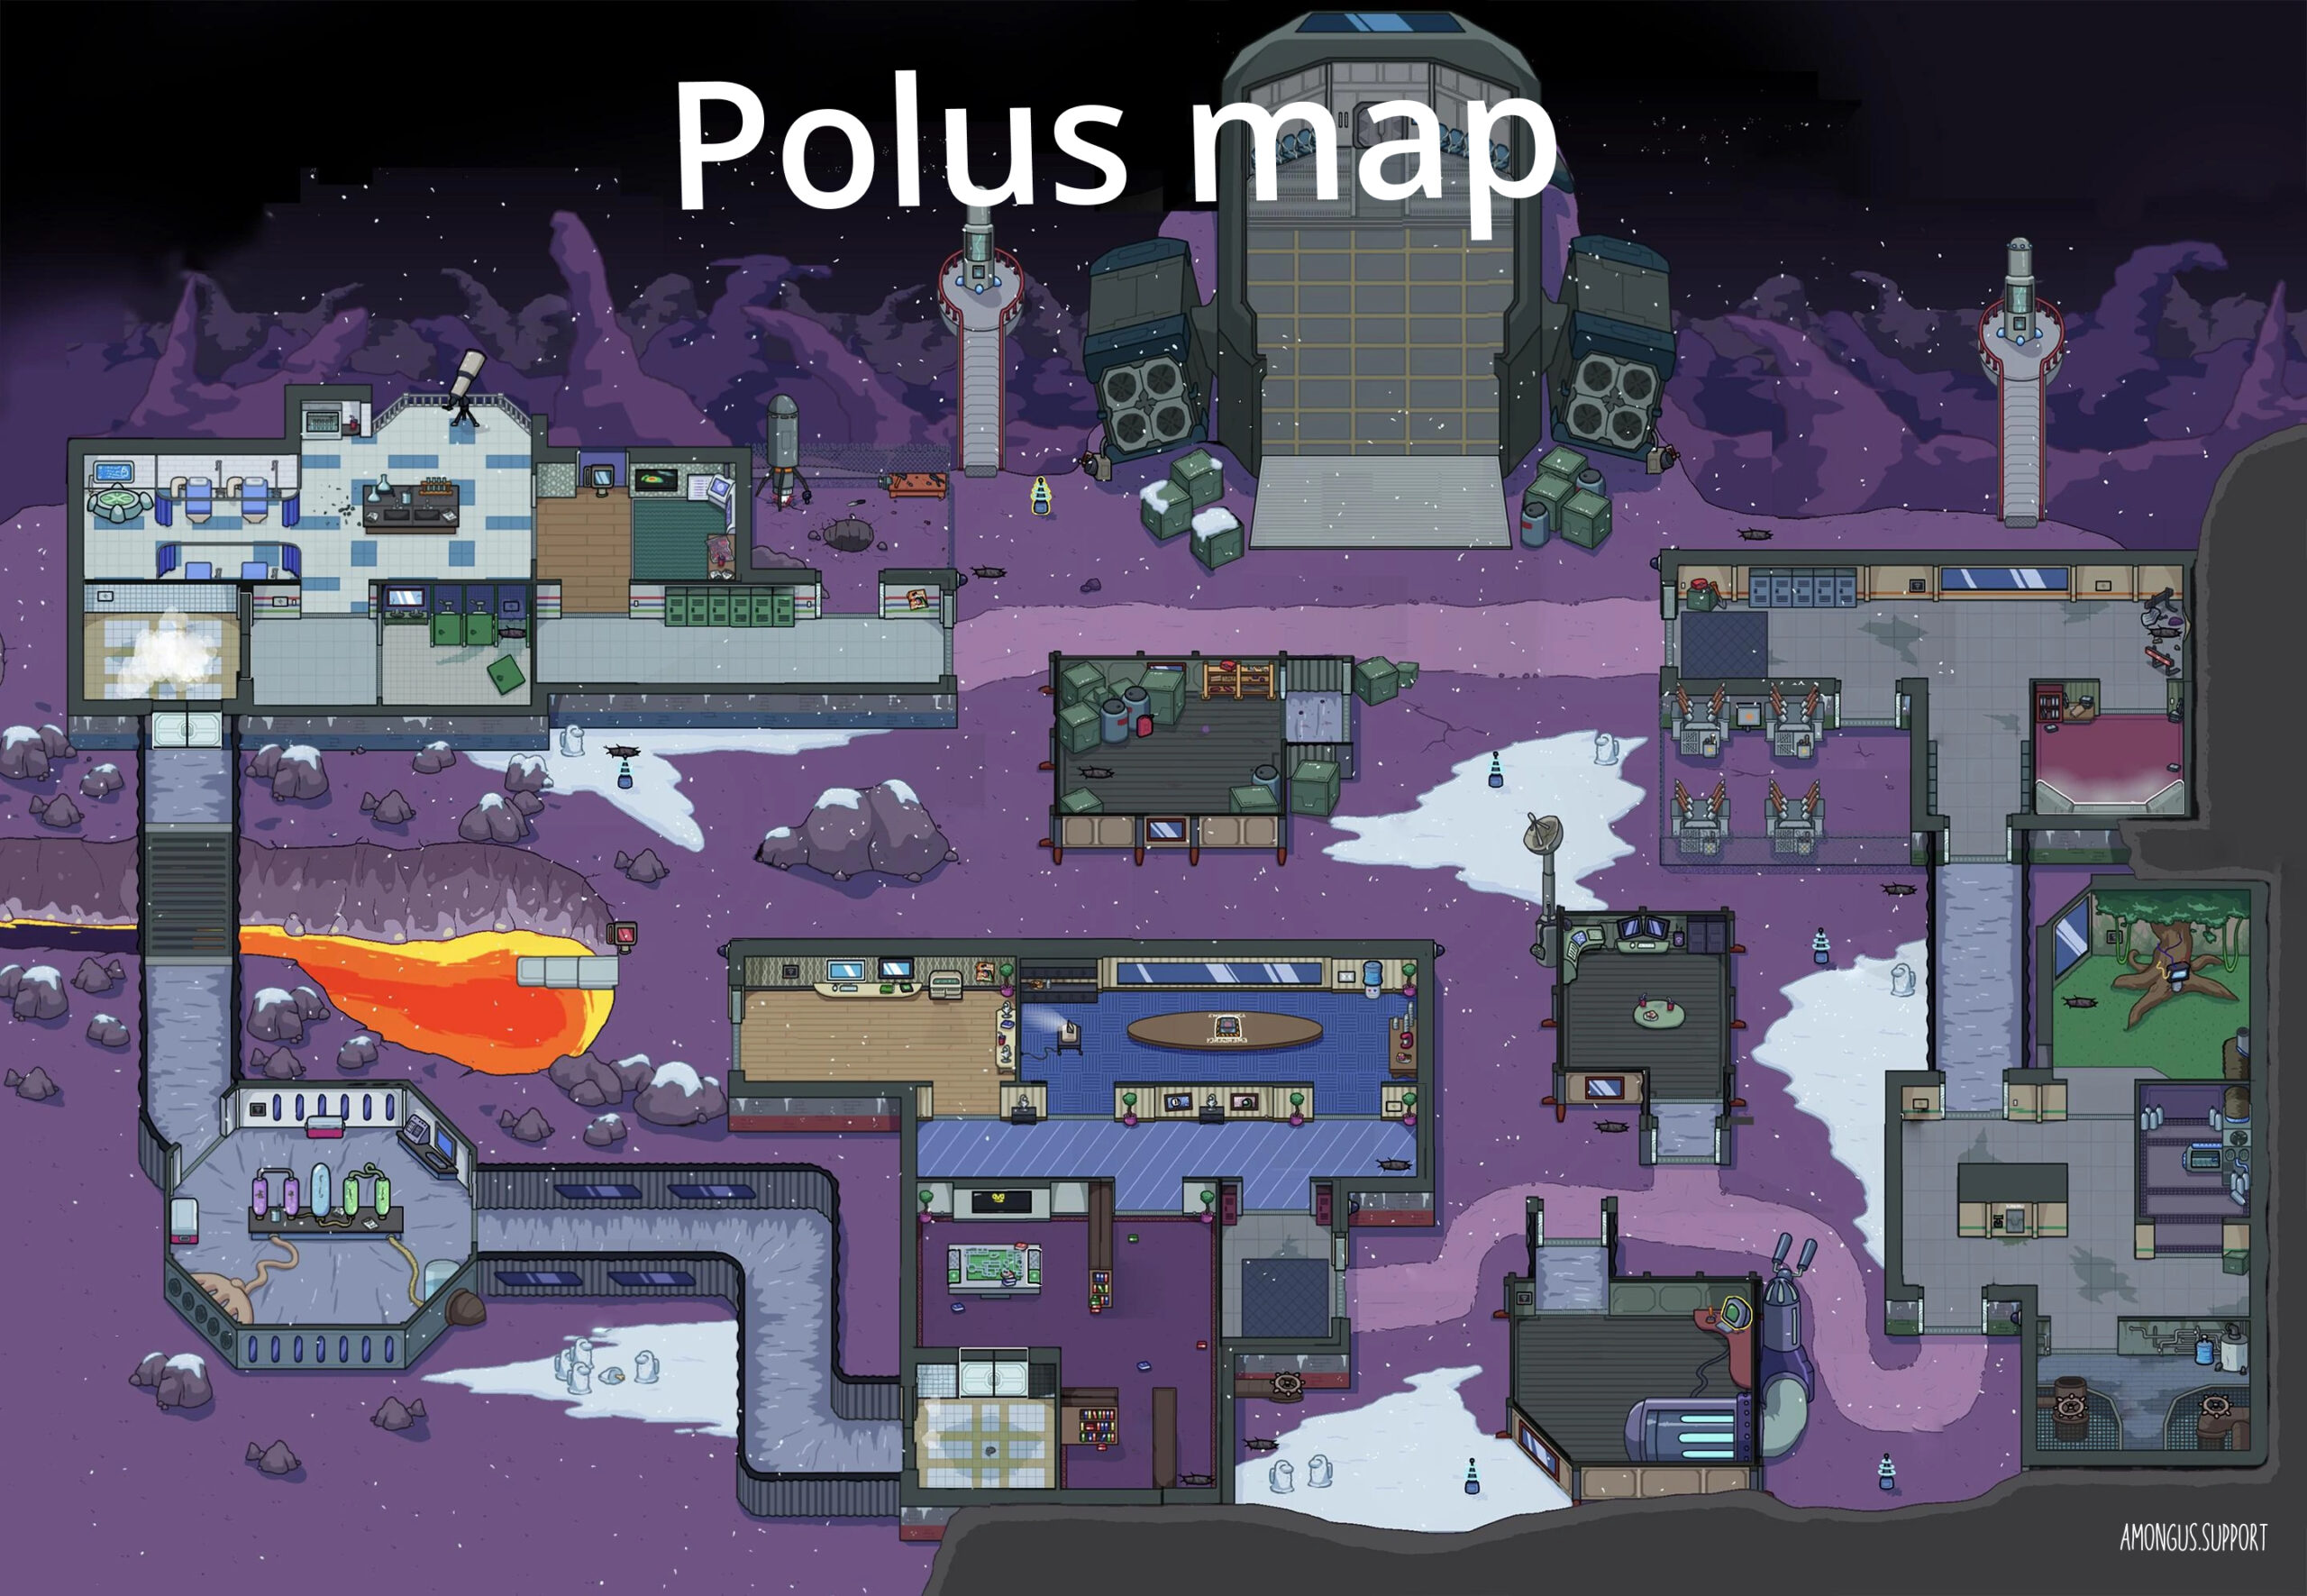 Among us polus map - amongus.support